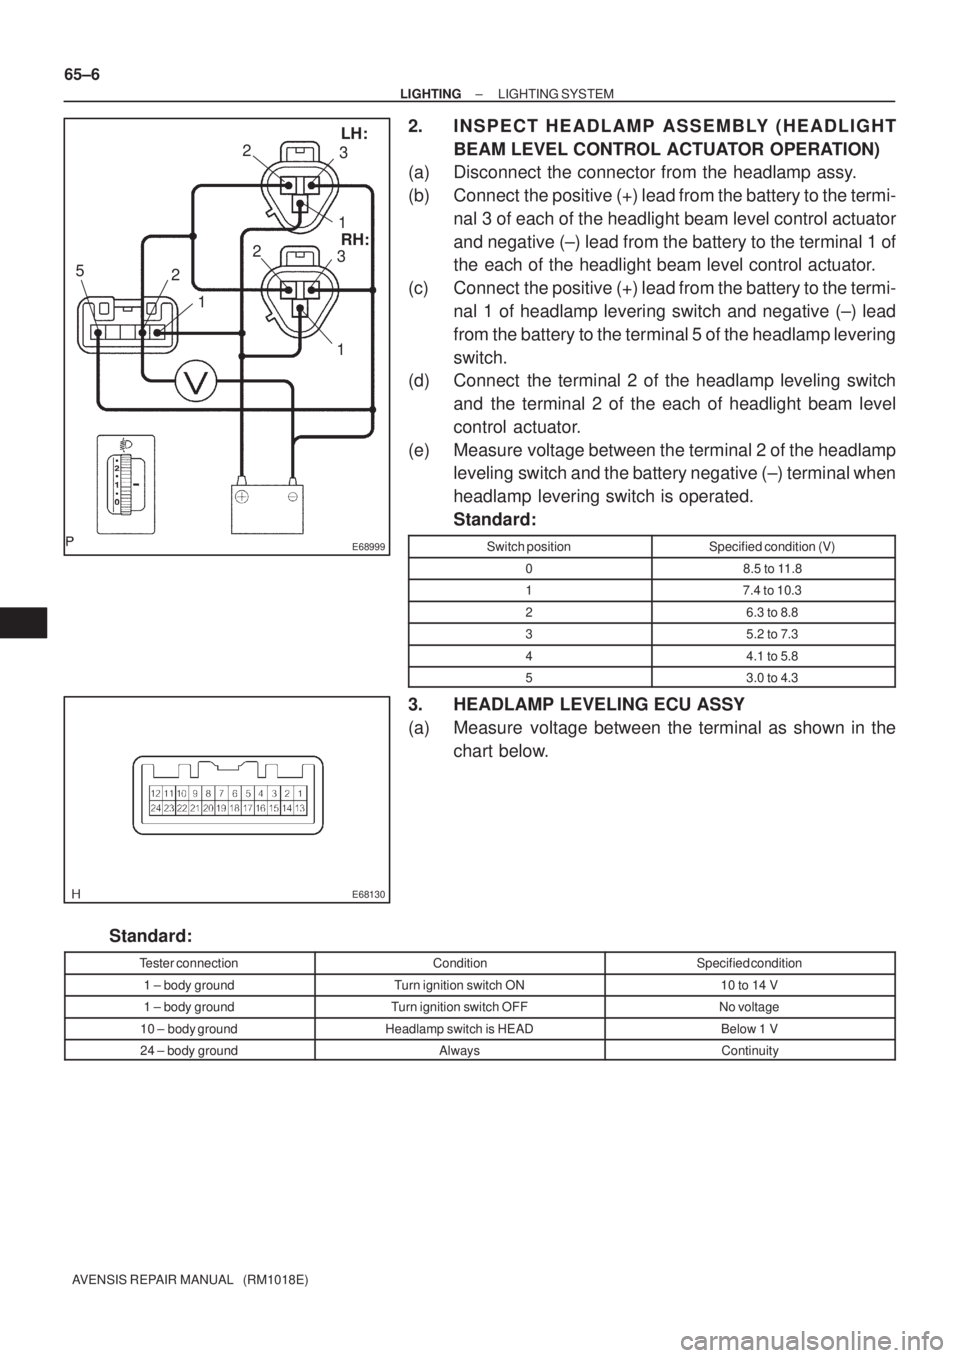 TOYOTA AVENSIS 2002  Repair Manual E68999
LH:
RH: 1
13
3 2
2
1
25
E68130
65±6
± LIGHTINGLIGHTING SYSTEM
AVENSIS REPAIR MANUAL   (RM1018E)
2. INSPECT HEADLAMP ASSEMBLY (HEADLIGHT
BEAM LEVEL CONTROL ACTUATOR OPERATION)
(a) Disconnect t